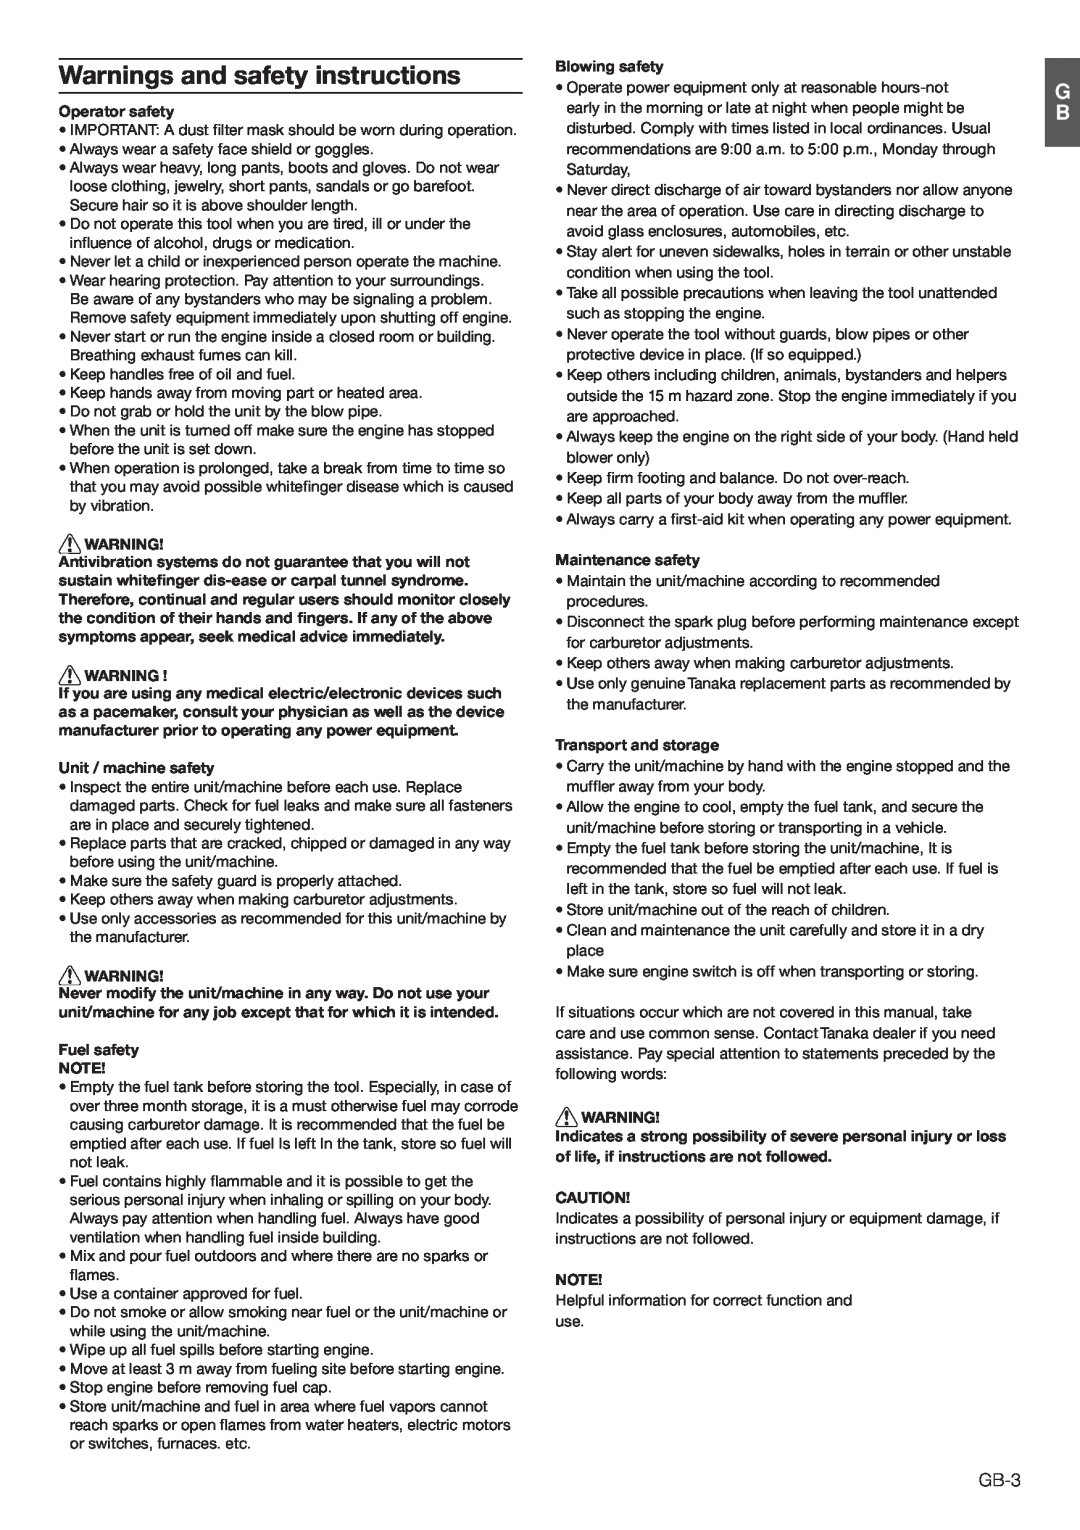 Tanaka THB-260PF manual 7ARNINGSNANDSSAFETYYINSTRUCTIONS 